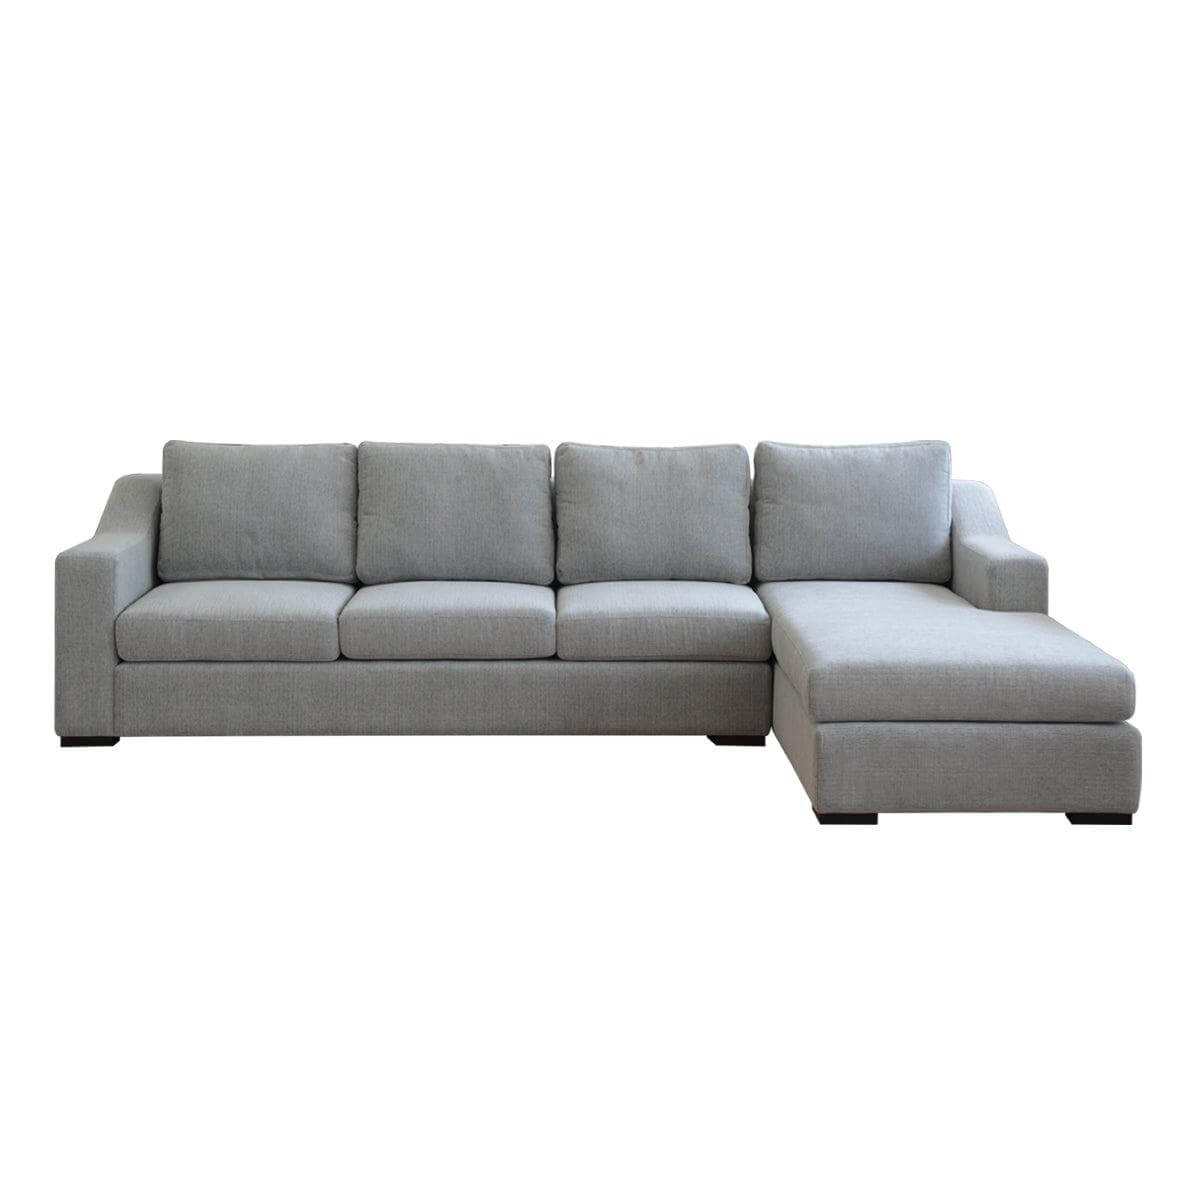 Presidio l shape three seat sofa with prestigious accent arm furniture